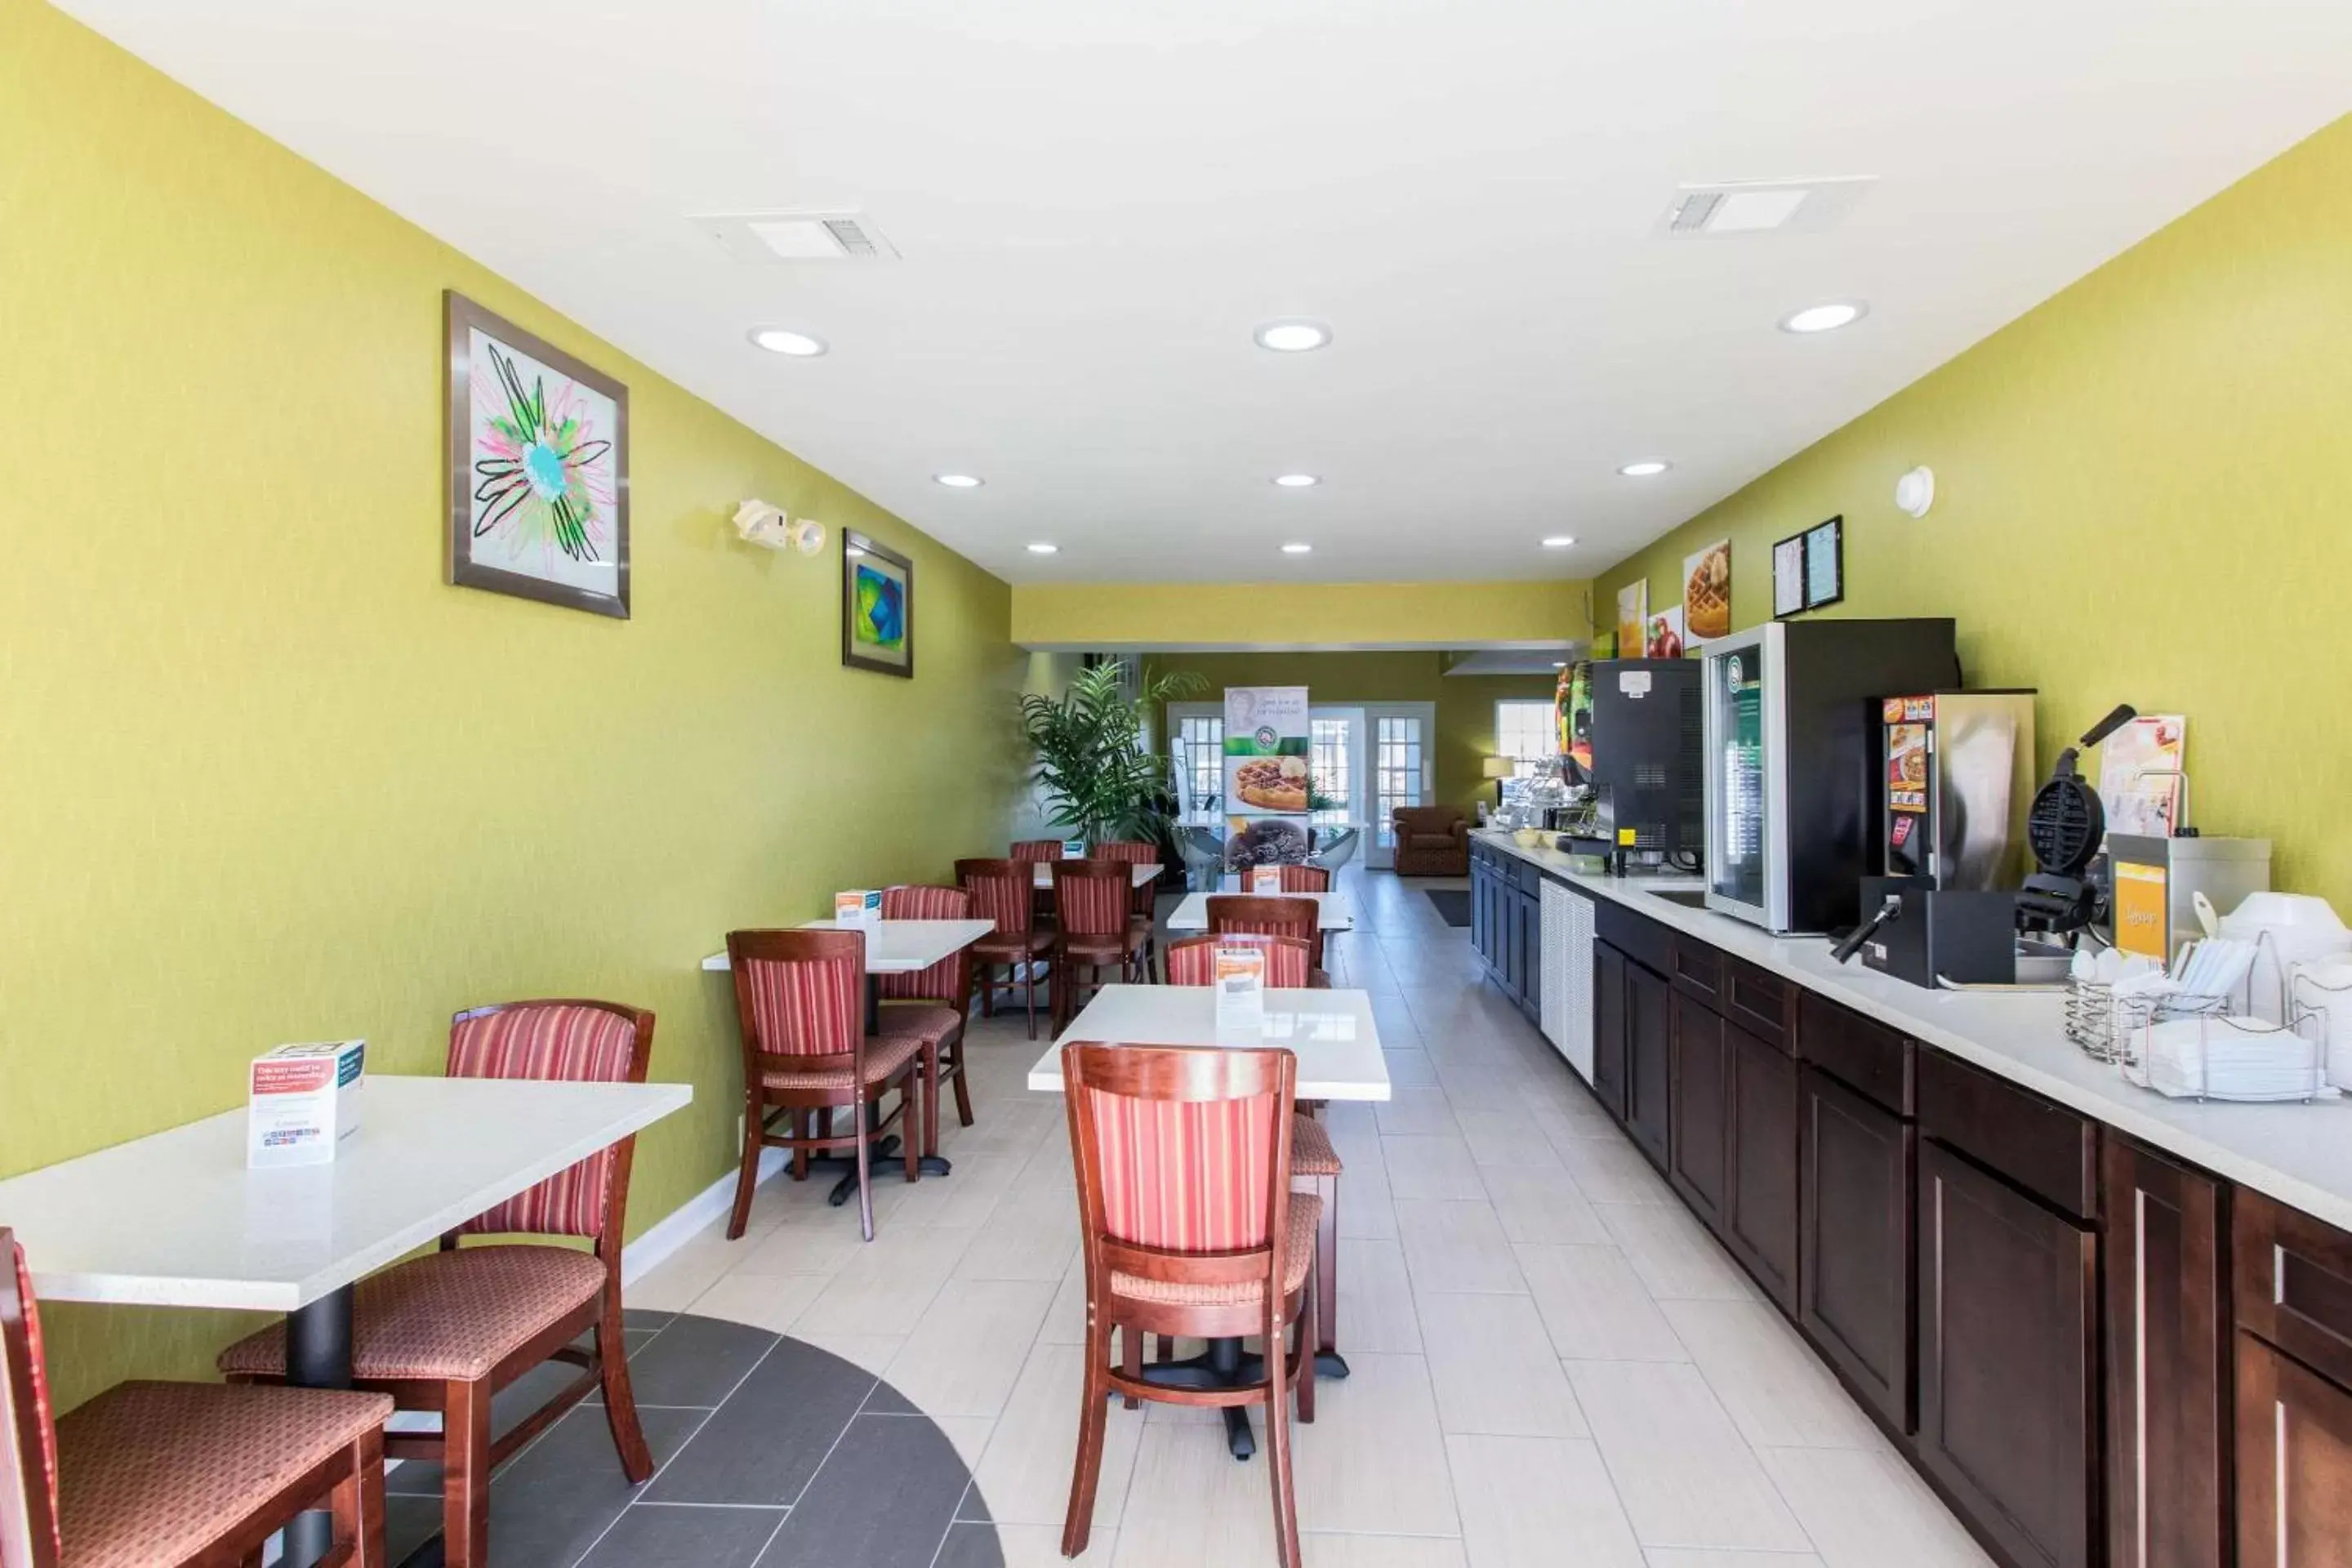 Restaurant/Places to Eat in Quality Inn Albertville US 431